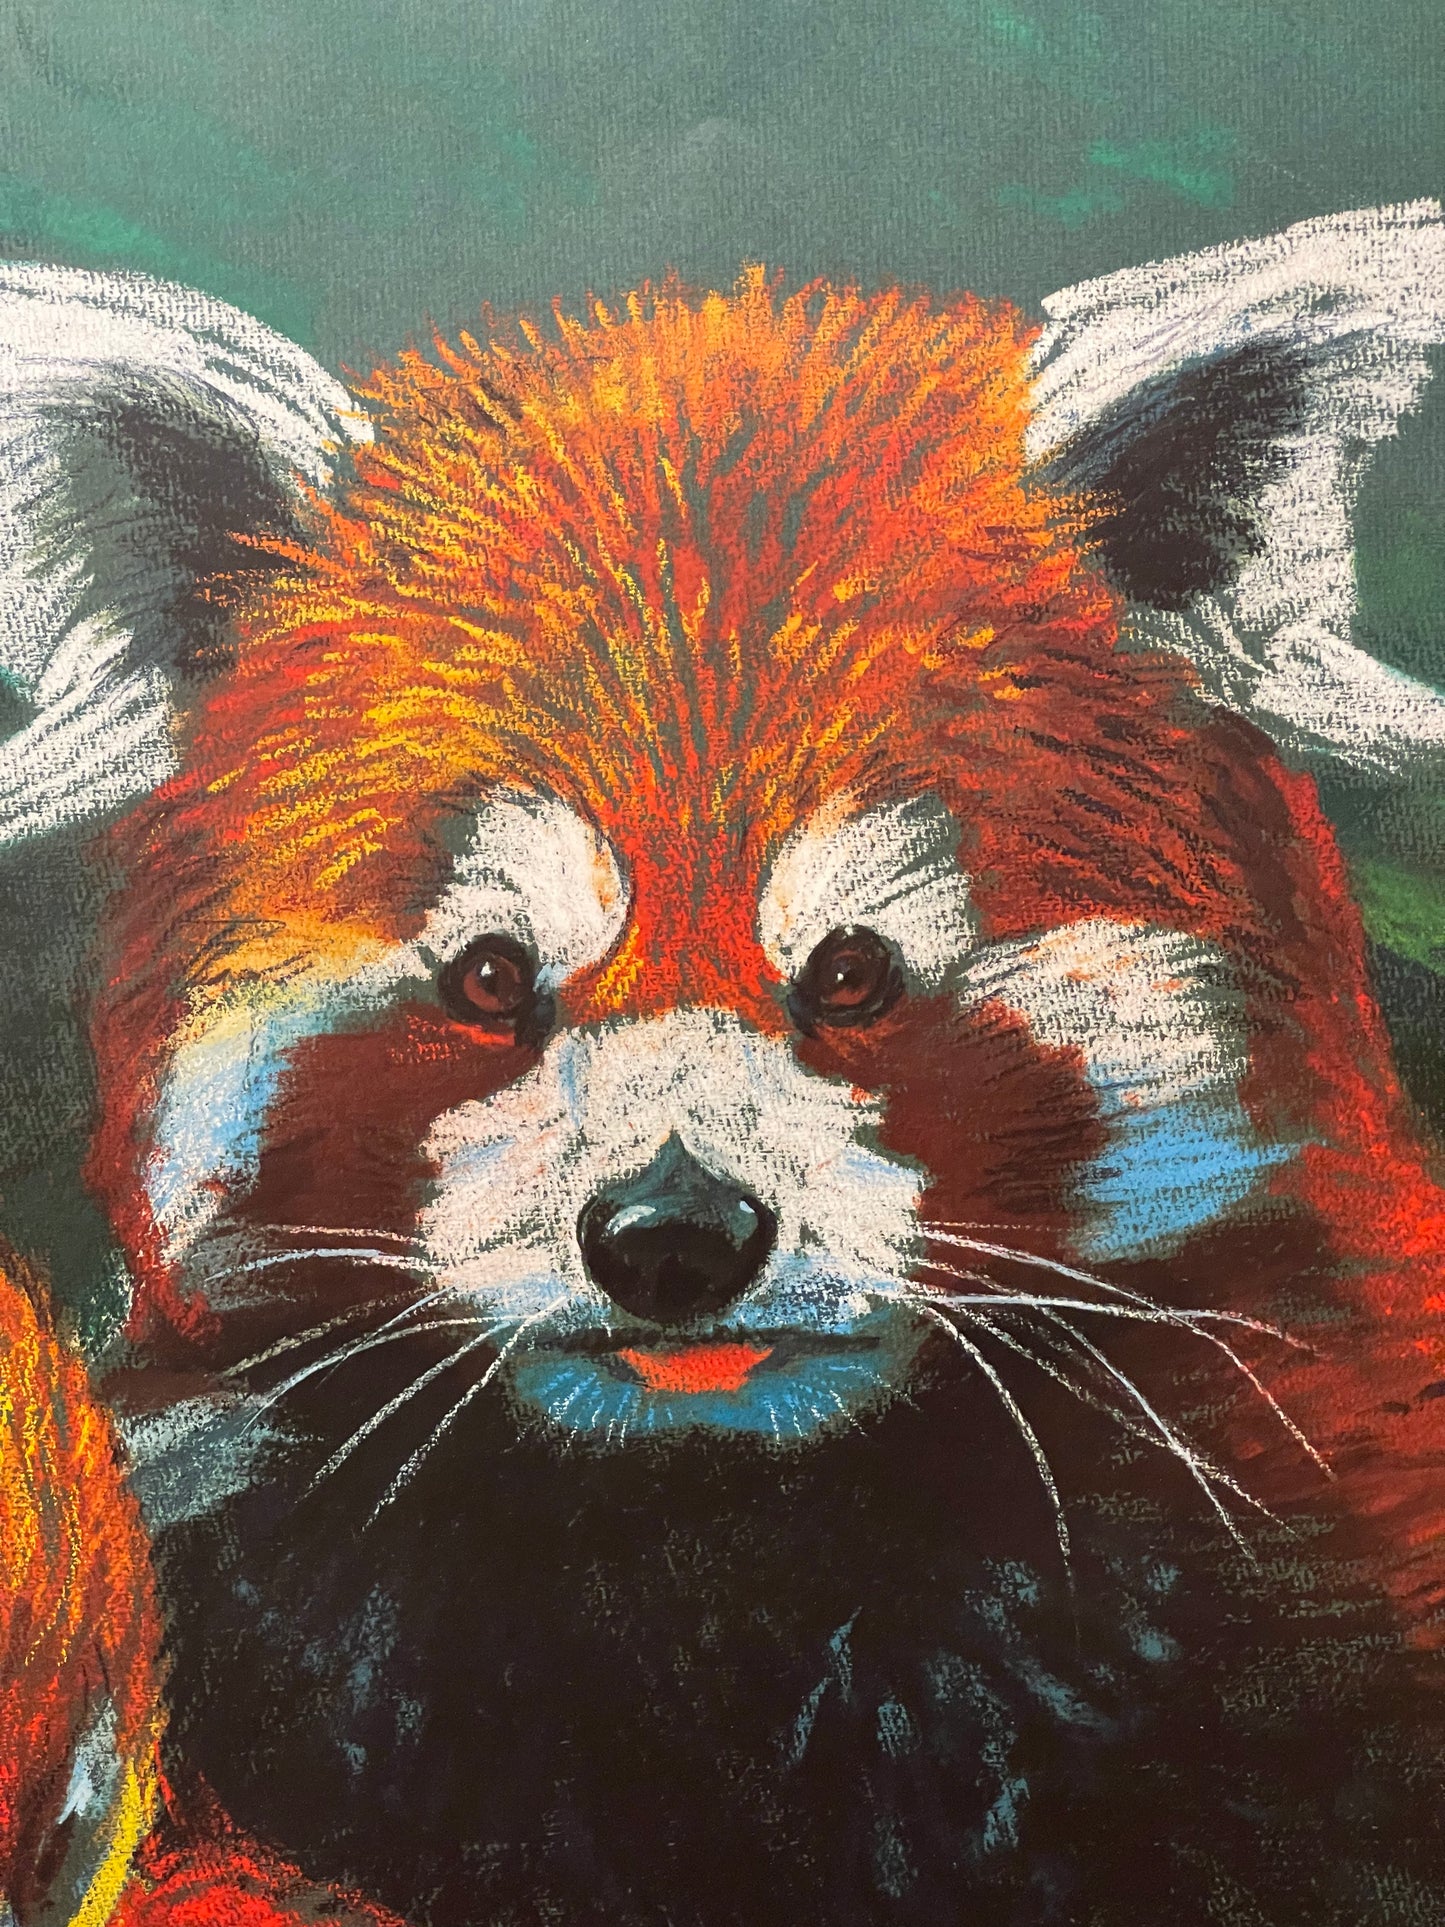 Rare Tierpark Berlin Original Zoo Poster Of Red Pandas By Reiner Zieger